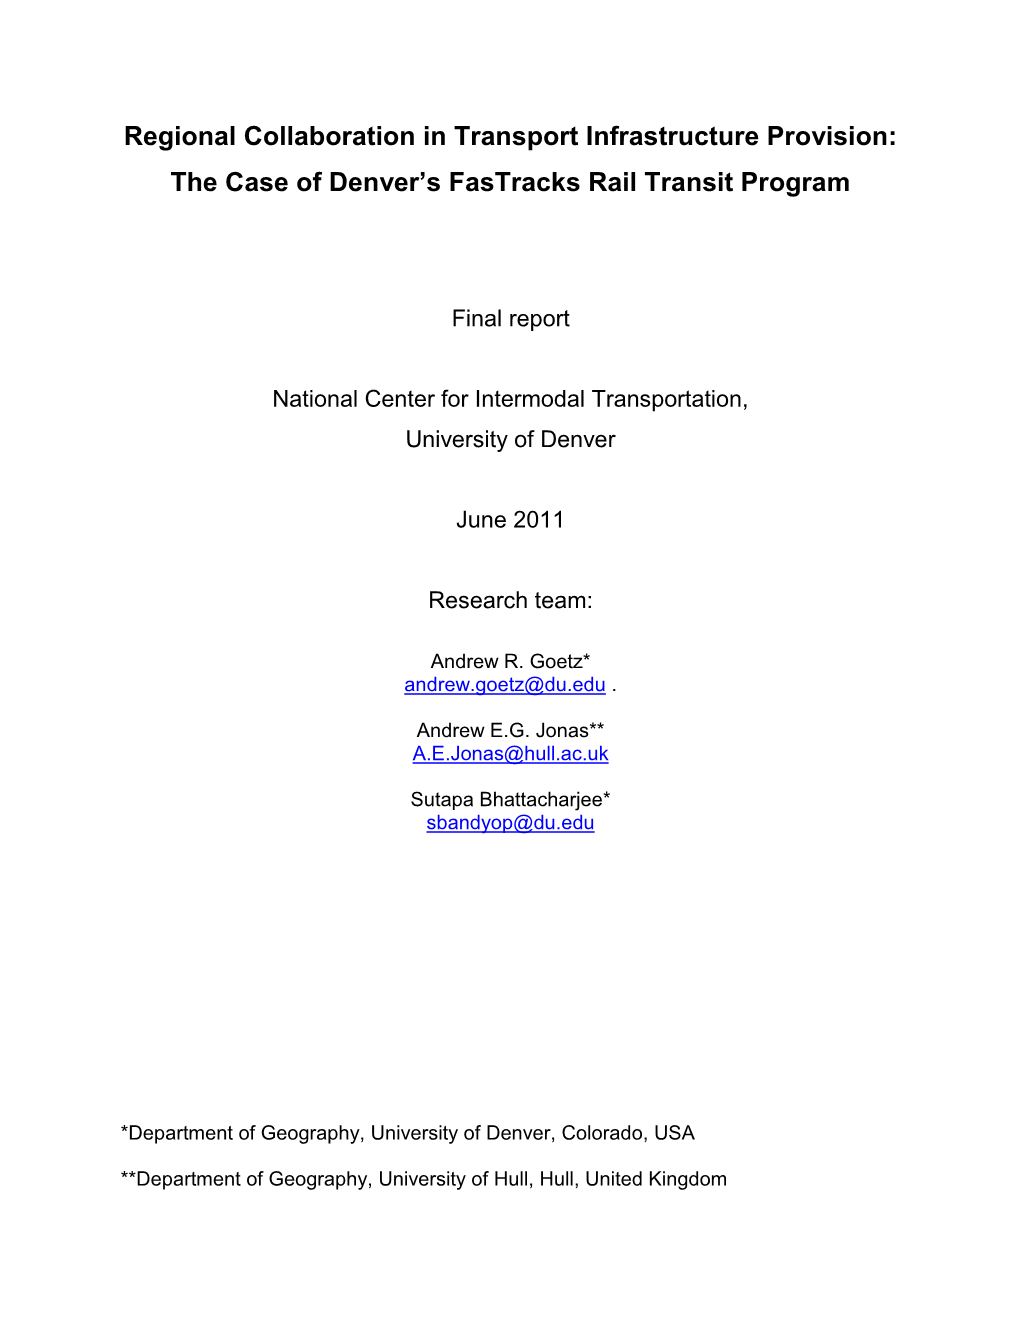 Regional Collaboration in Transport Infrastructure Provision: the Case of Denver’S Fastracks Rail Transit Program